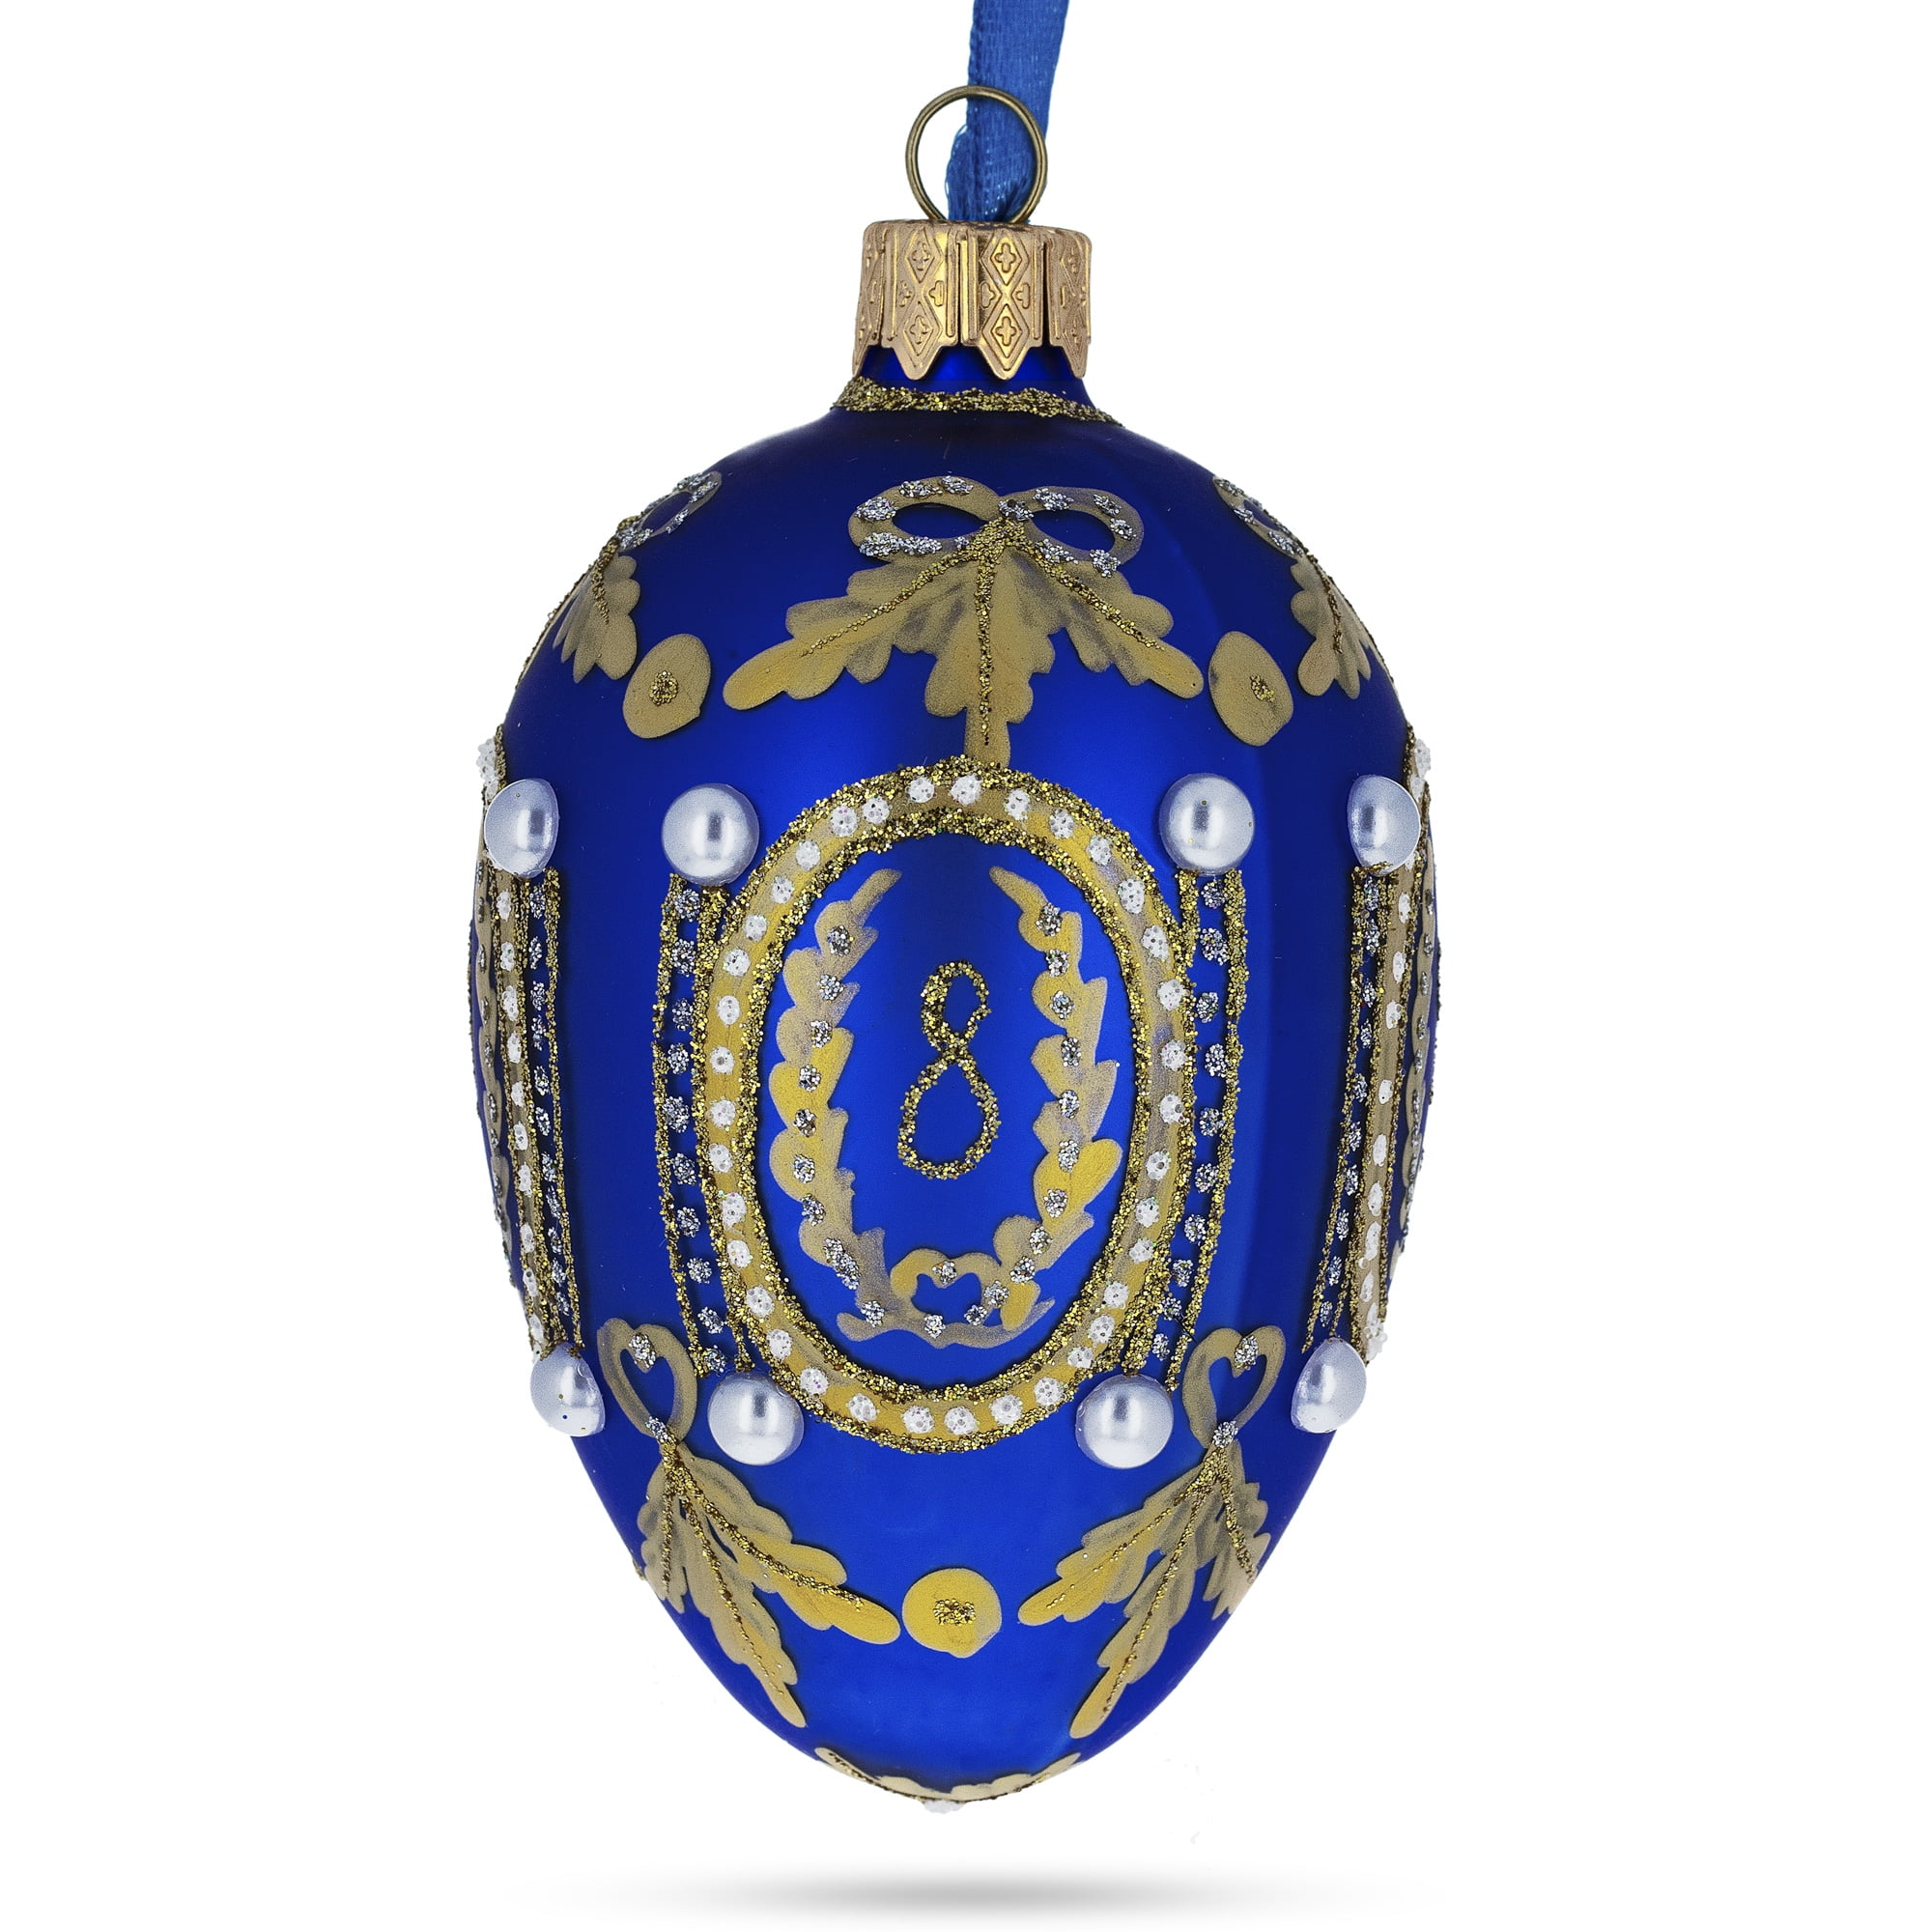 Silver on Blue Glass Egg Christmas Ornament